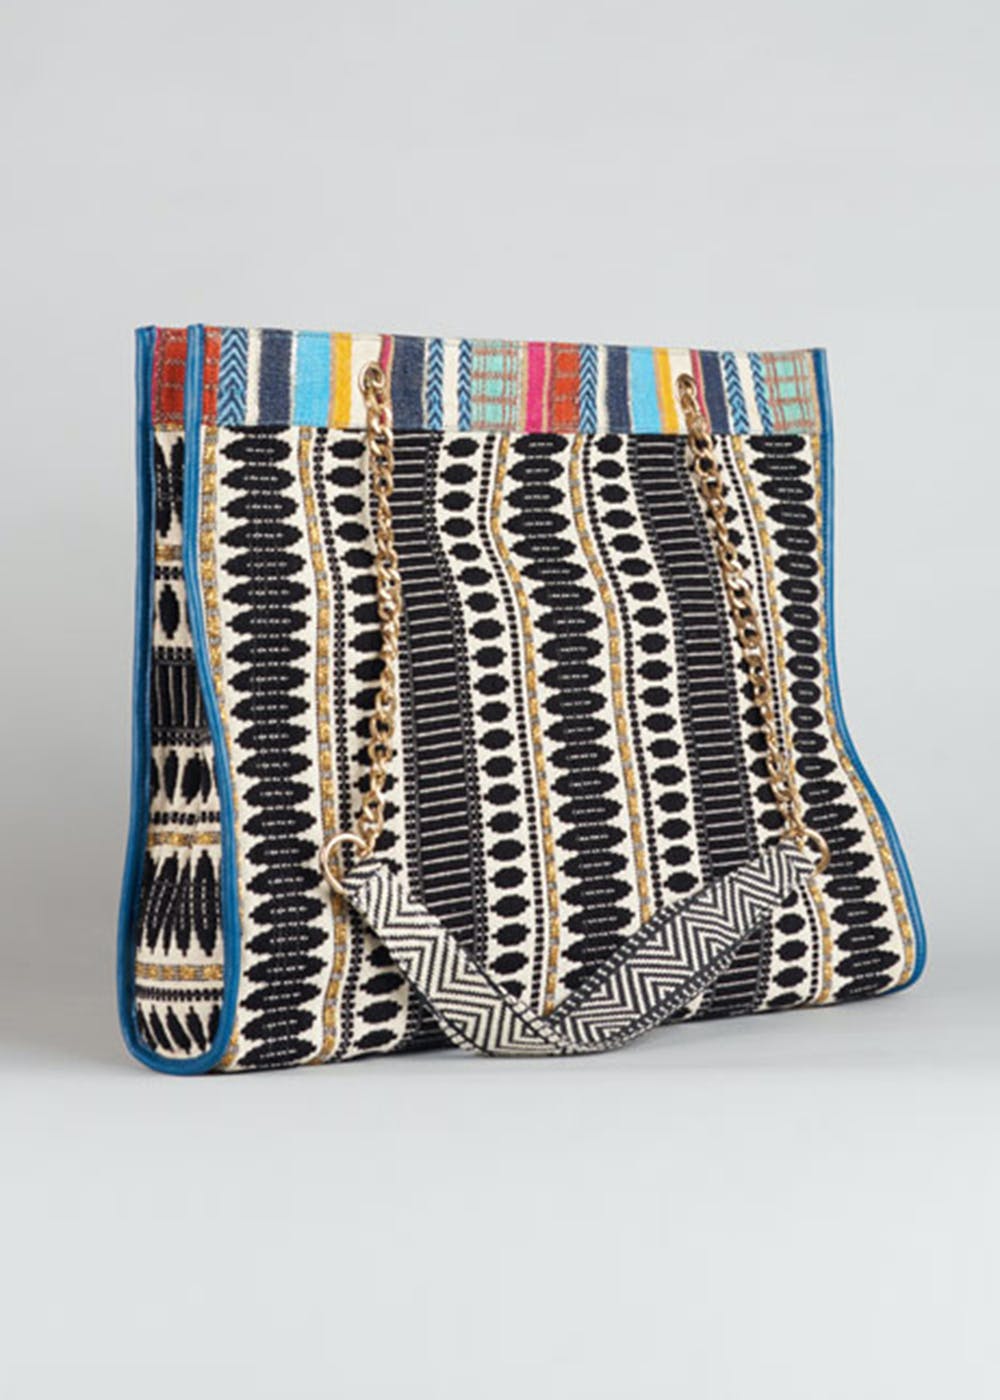 Get Textured Fabric Broad Handles Tote Bag at ₹ 5250 | LBB Shop